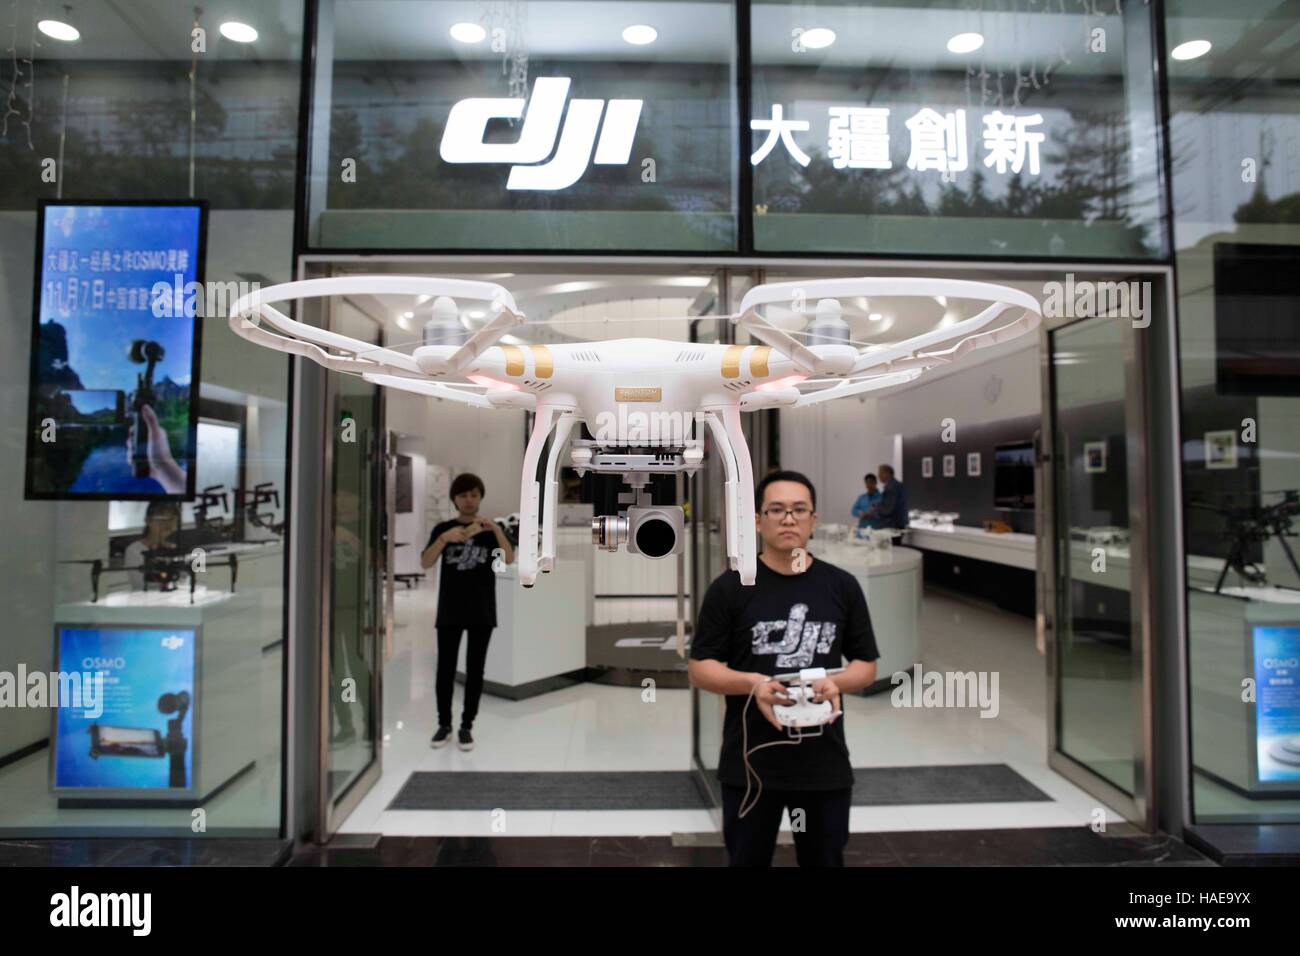 Dji china hi-res stock photography and images - Alamy